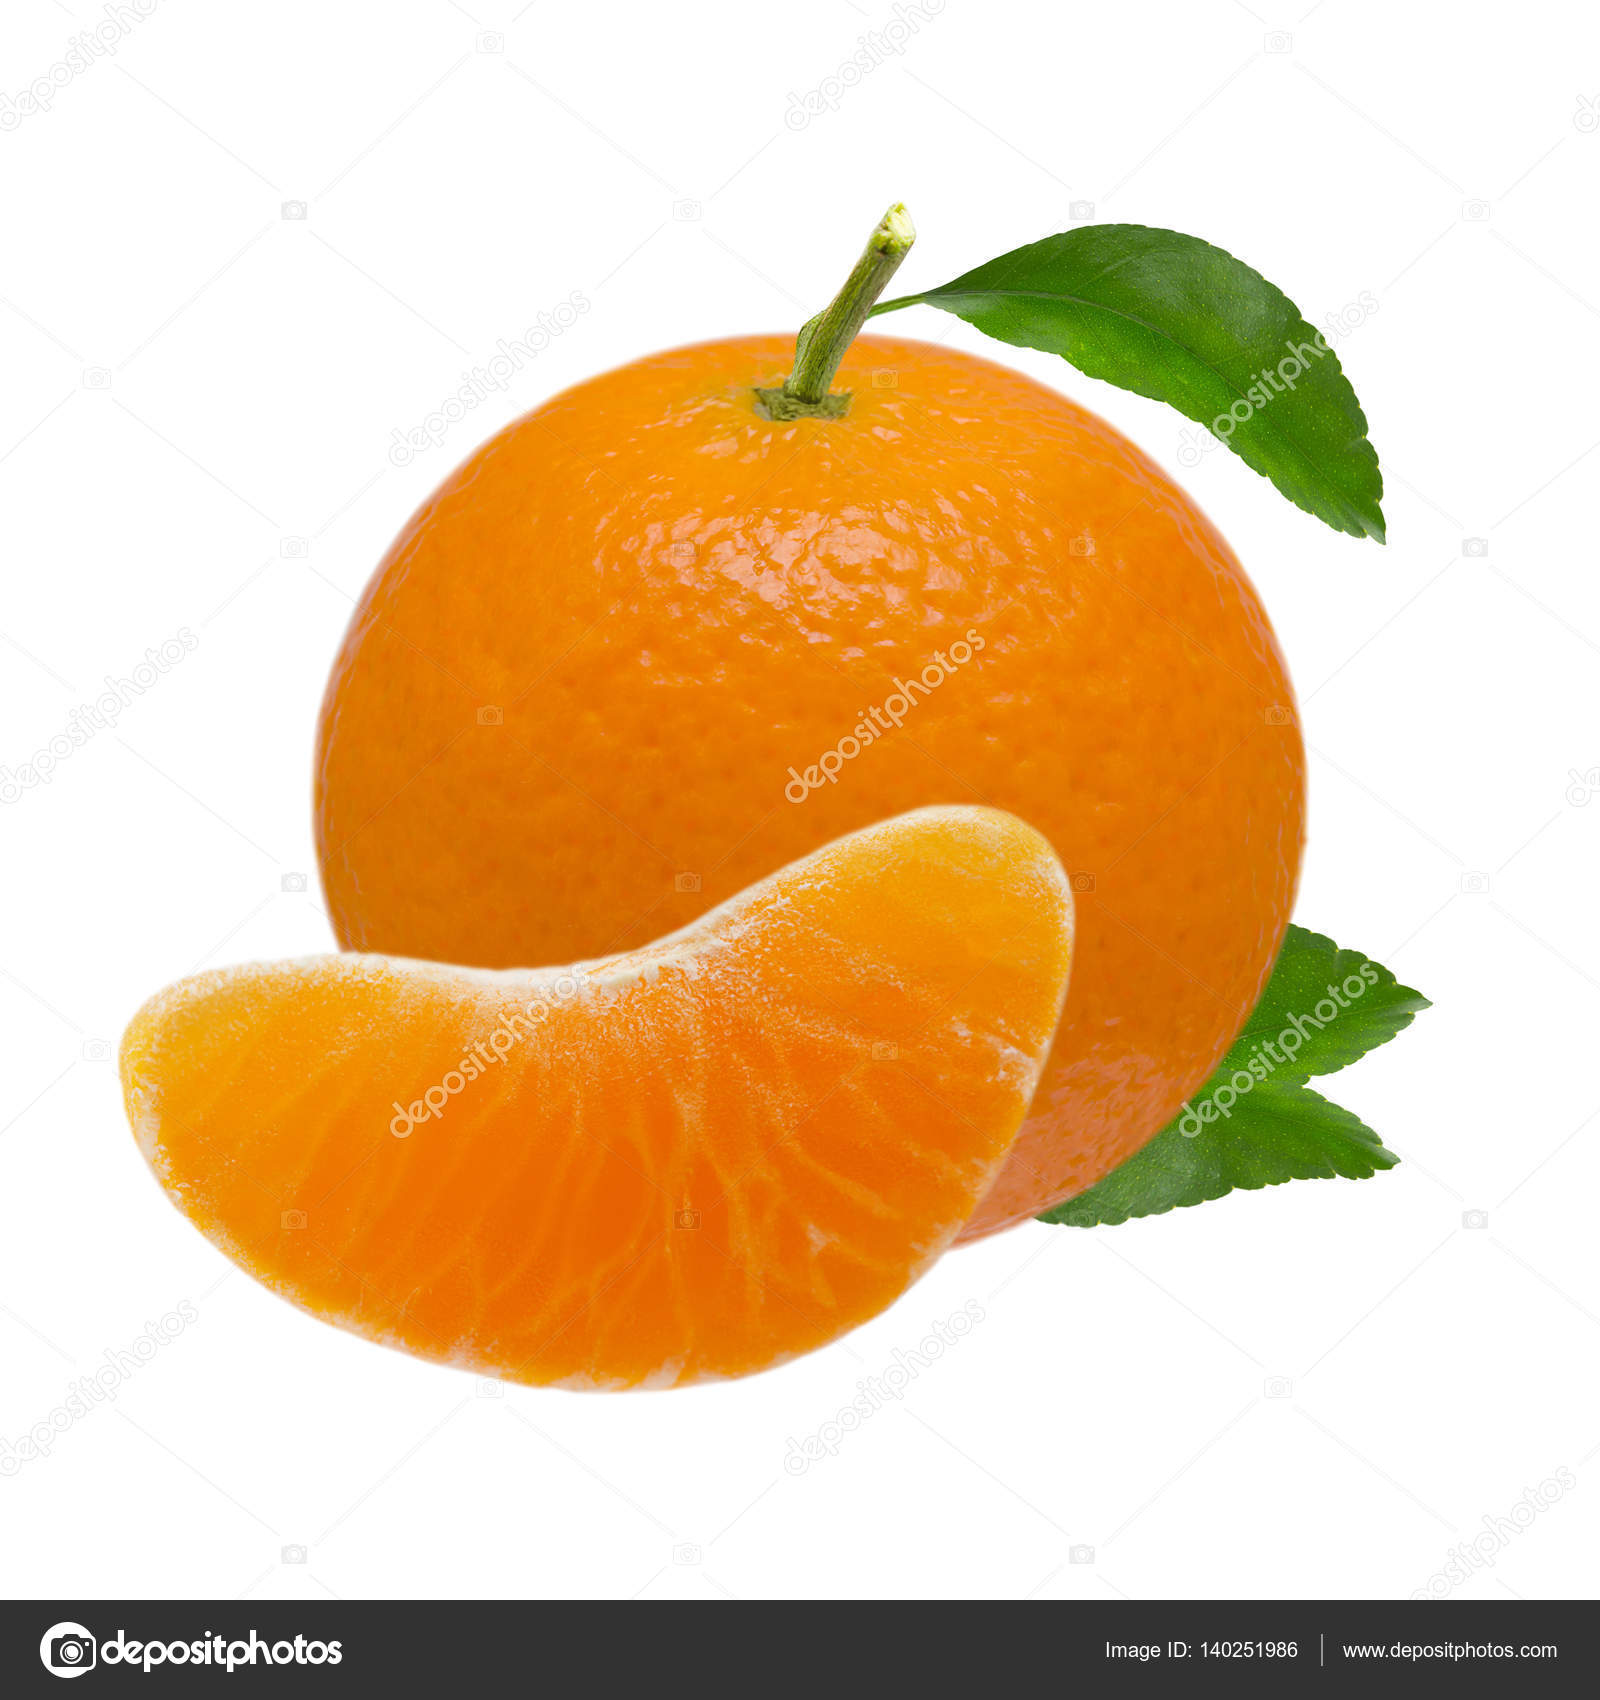 Tangerine orange fruits isolated on white background with clipping ...